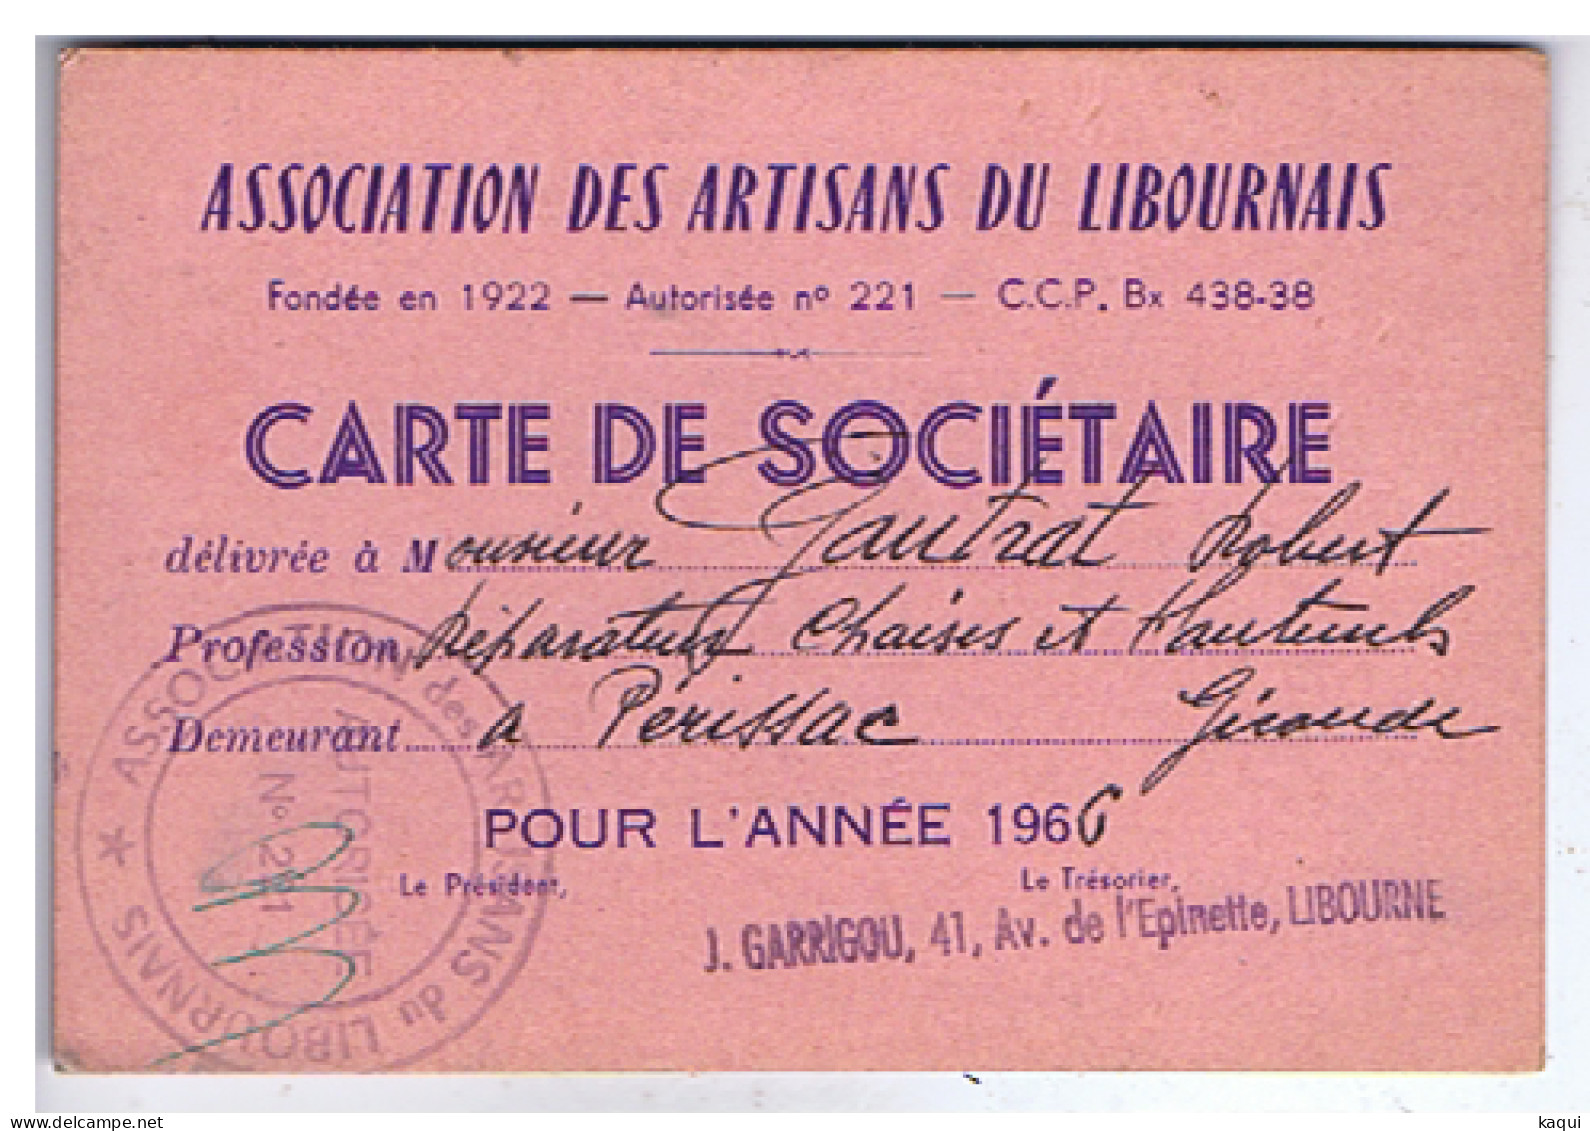 GIRONDE - LIBOURNE - Carte De Sociétaire - Association Des Artisans Du Libournais - 1966 - Membership Cards